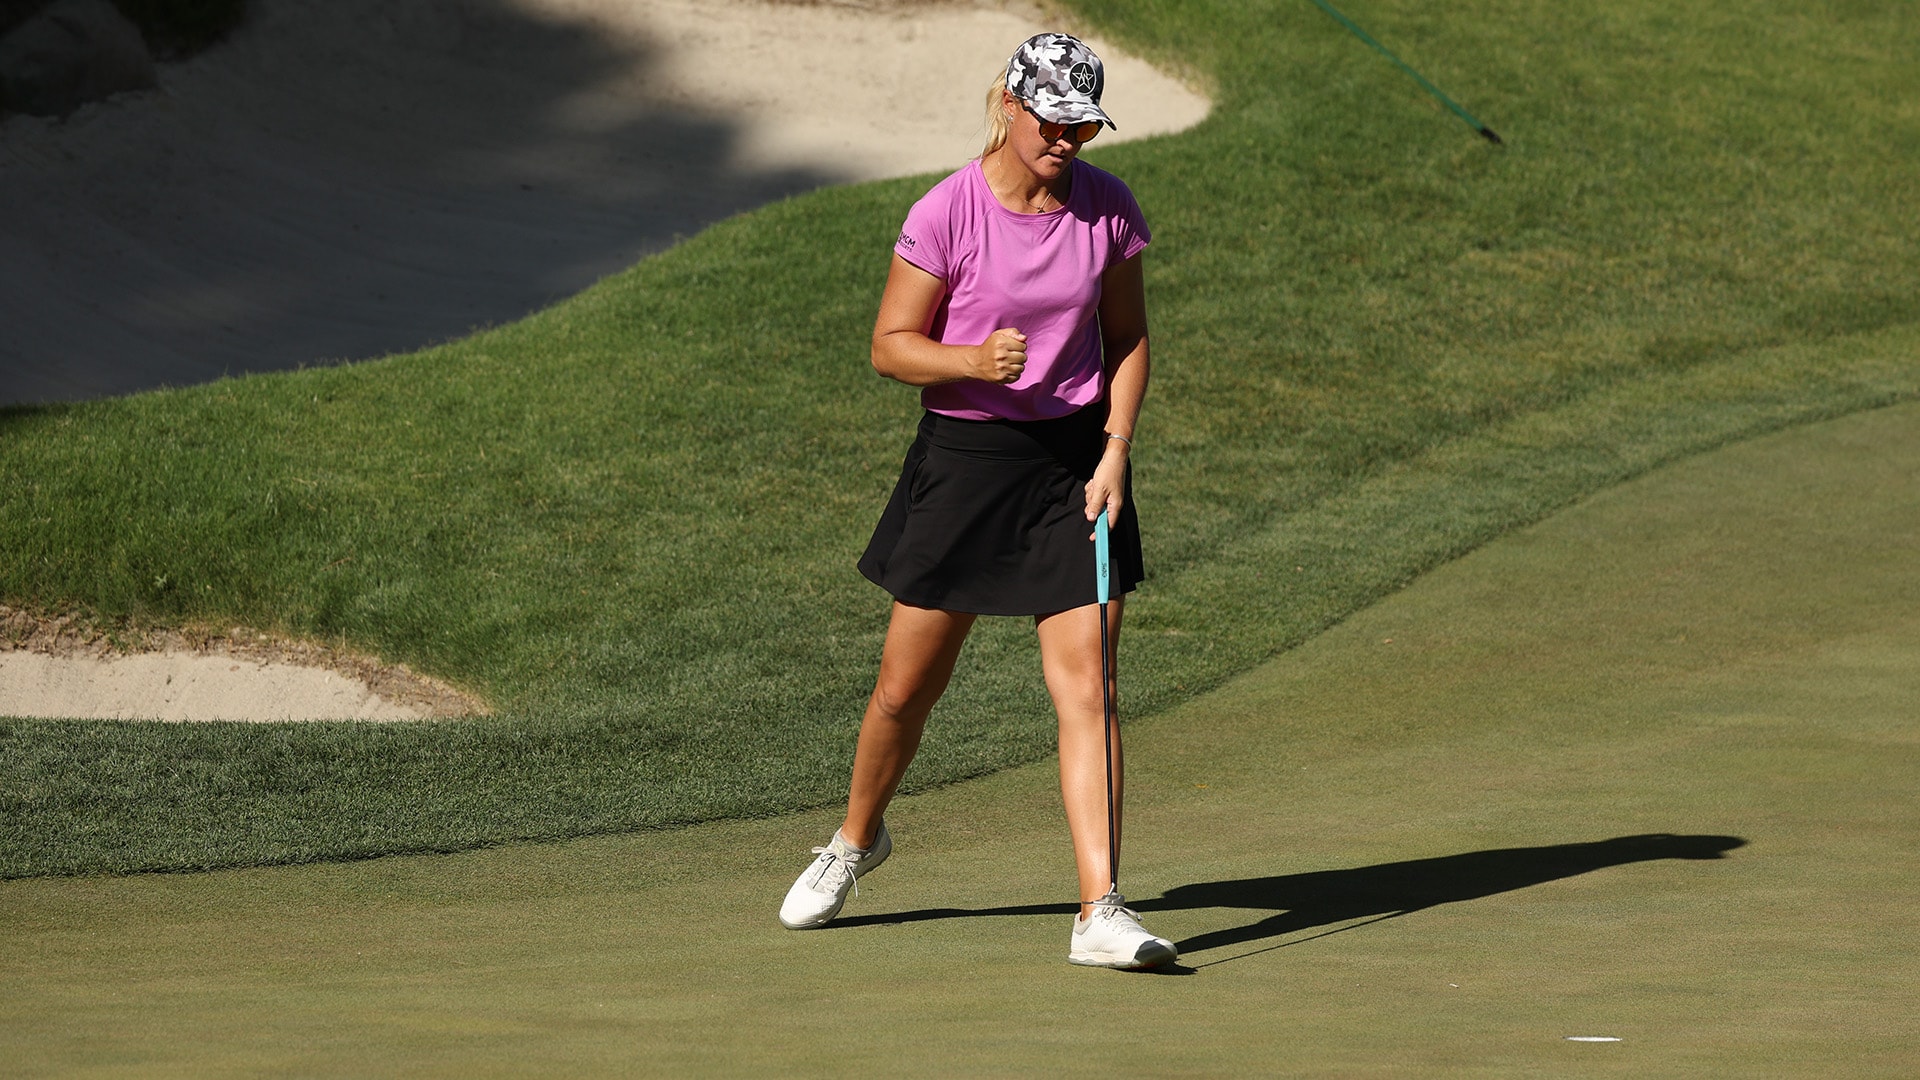 Anna Nordqvist, Cheyenne Knight hit clutch shots to advance in LPGA Match Play